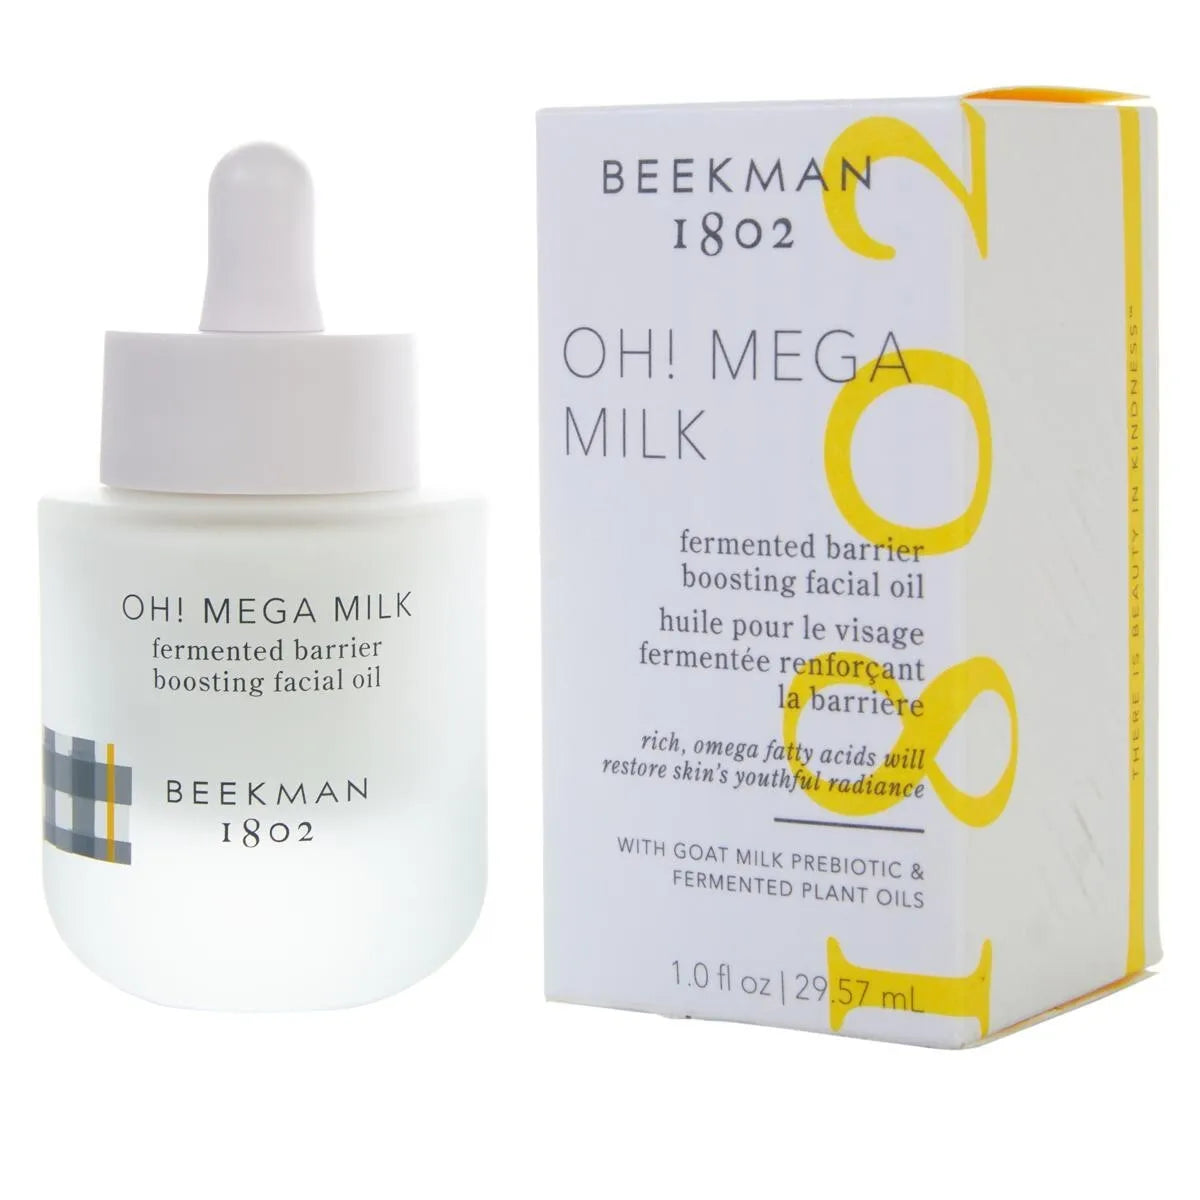 Oh! Mega Milk Fermented Barrier Boosting Facial Oil 